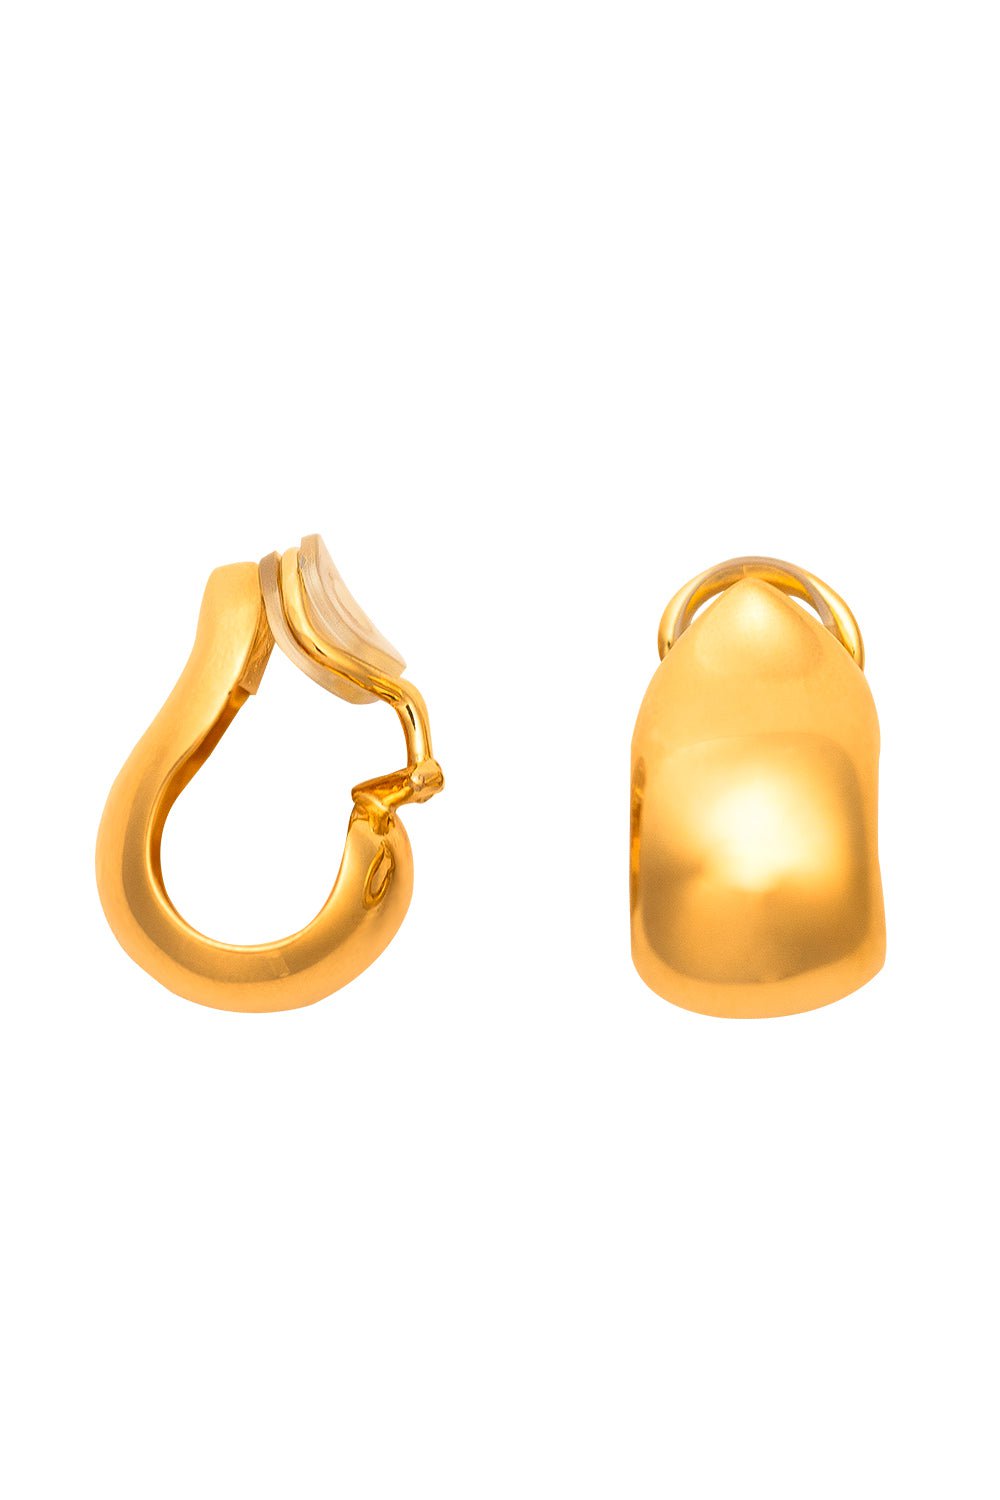 TAMARA COMOLLI-Large Clip Hoop Earrings-YELLOW GOLD